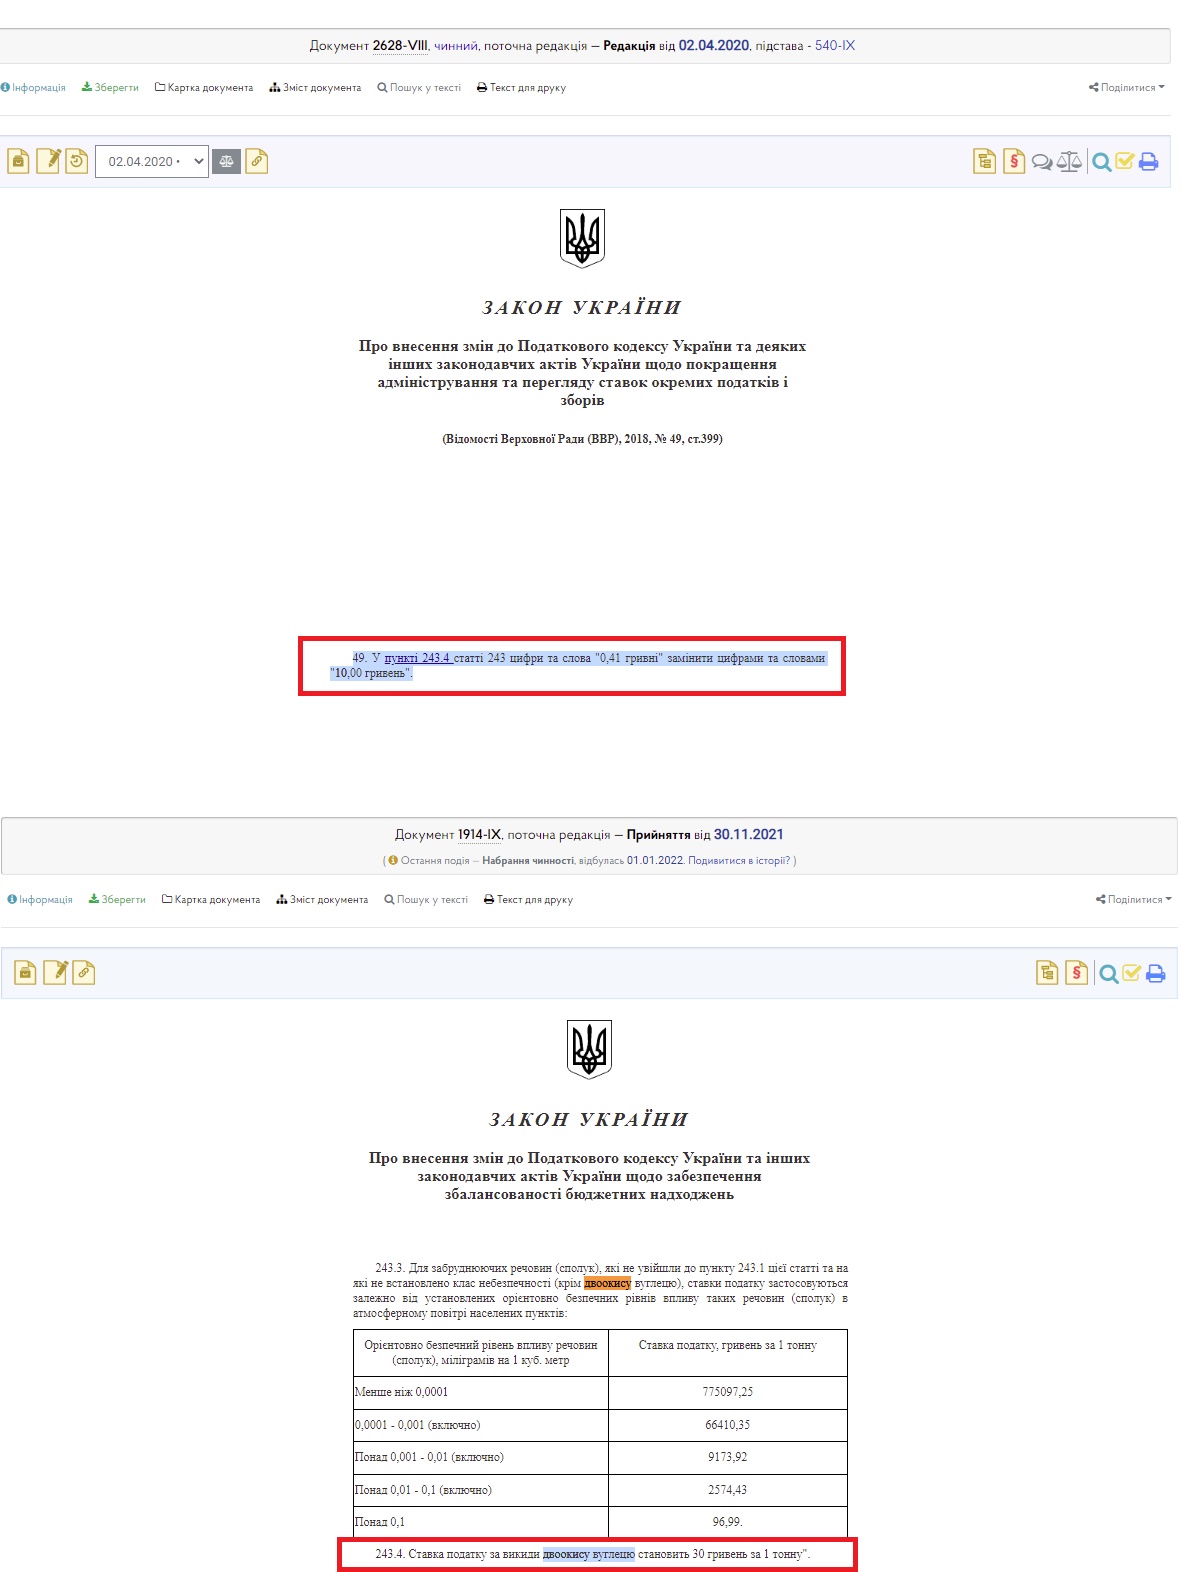 https://zakon.rada.gov.ua/laws/show/2628-19#n599